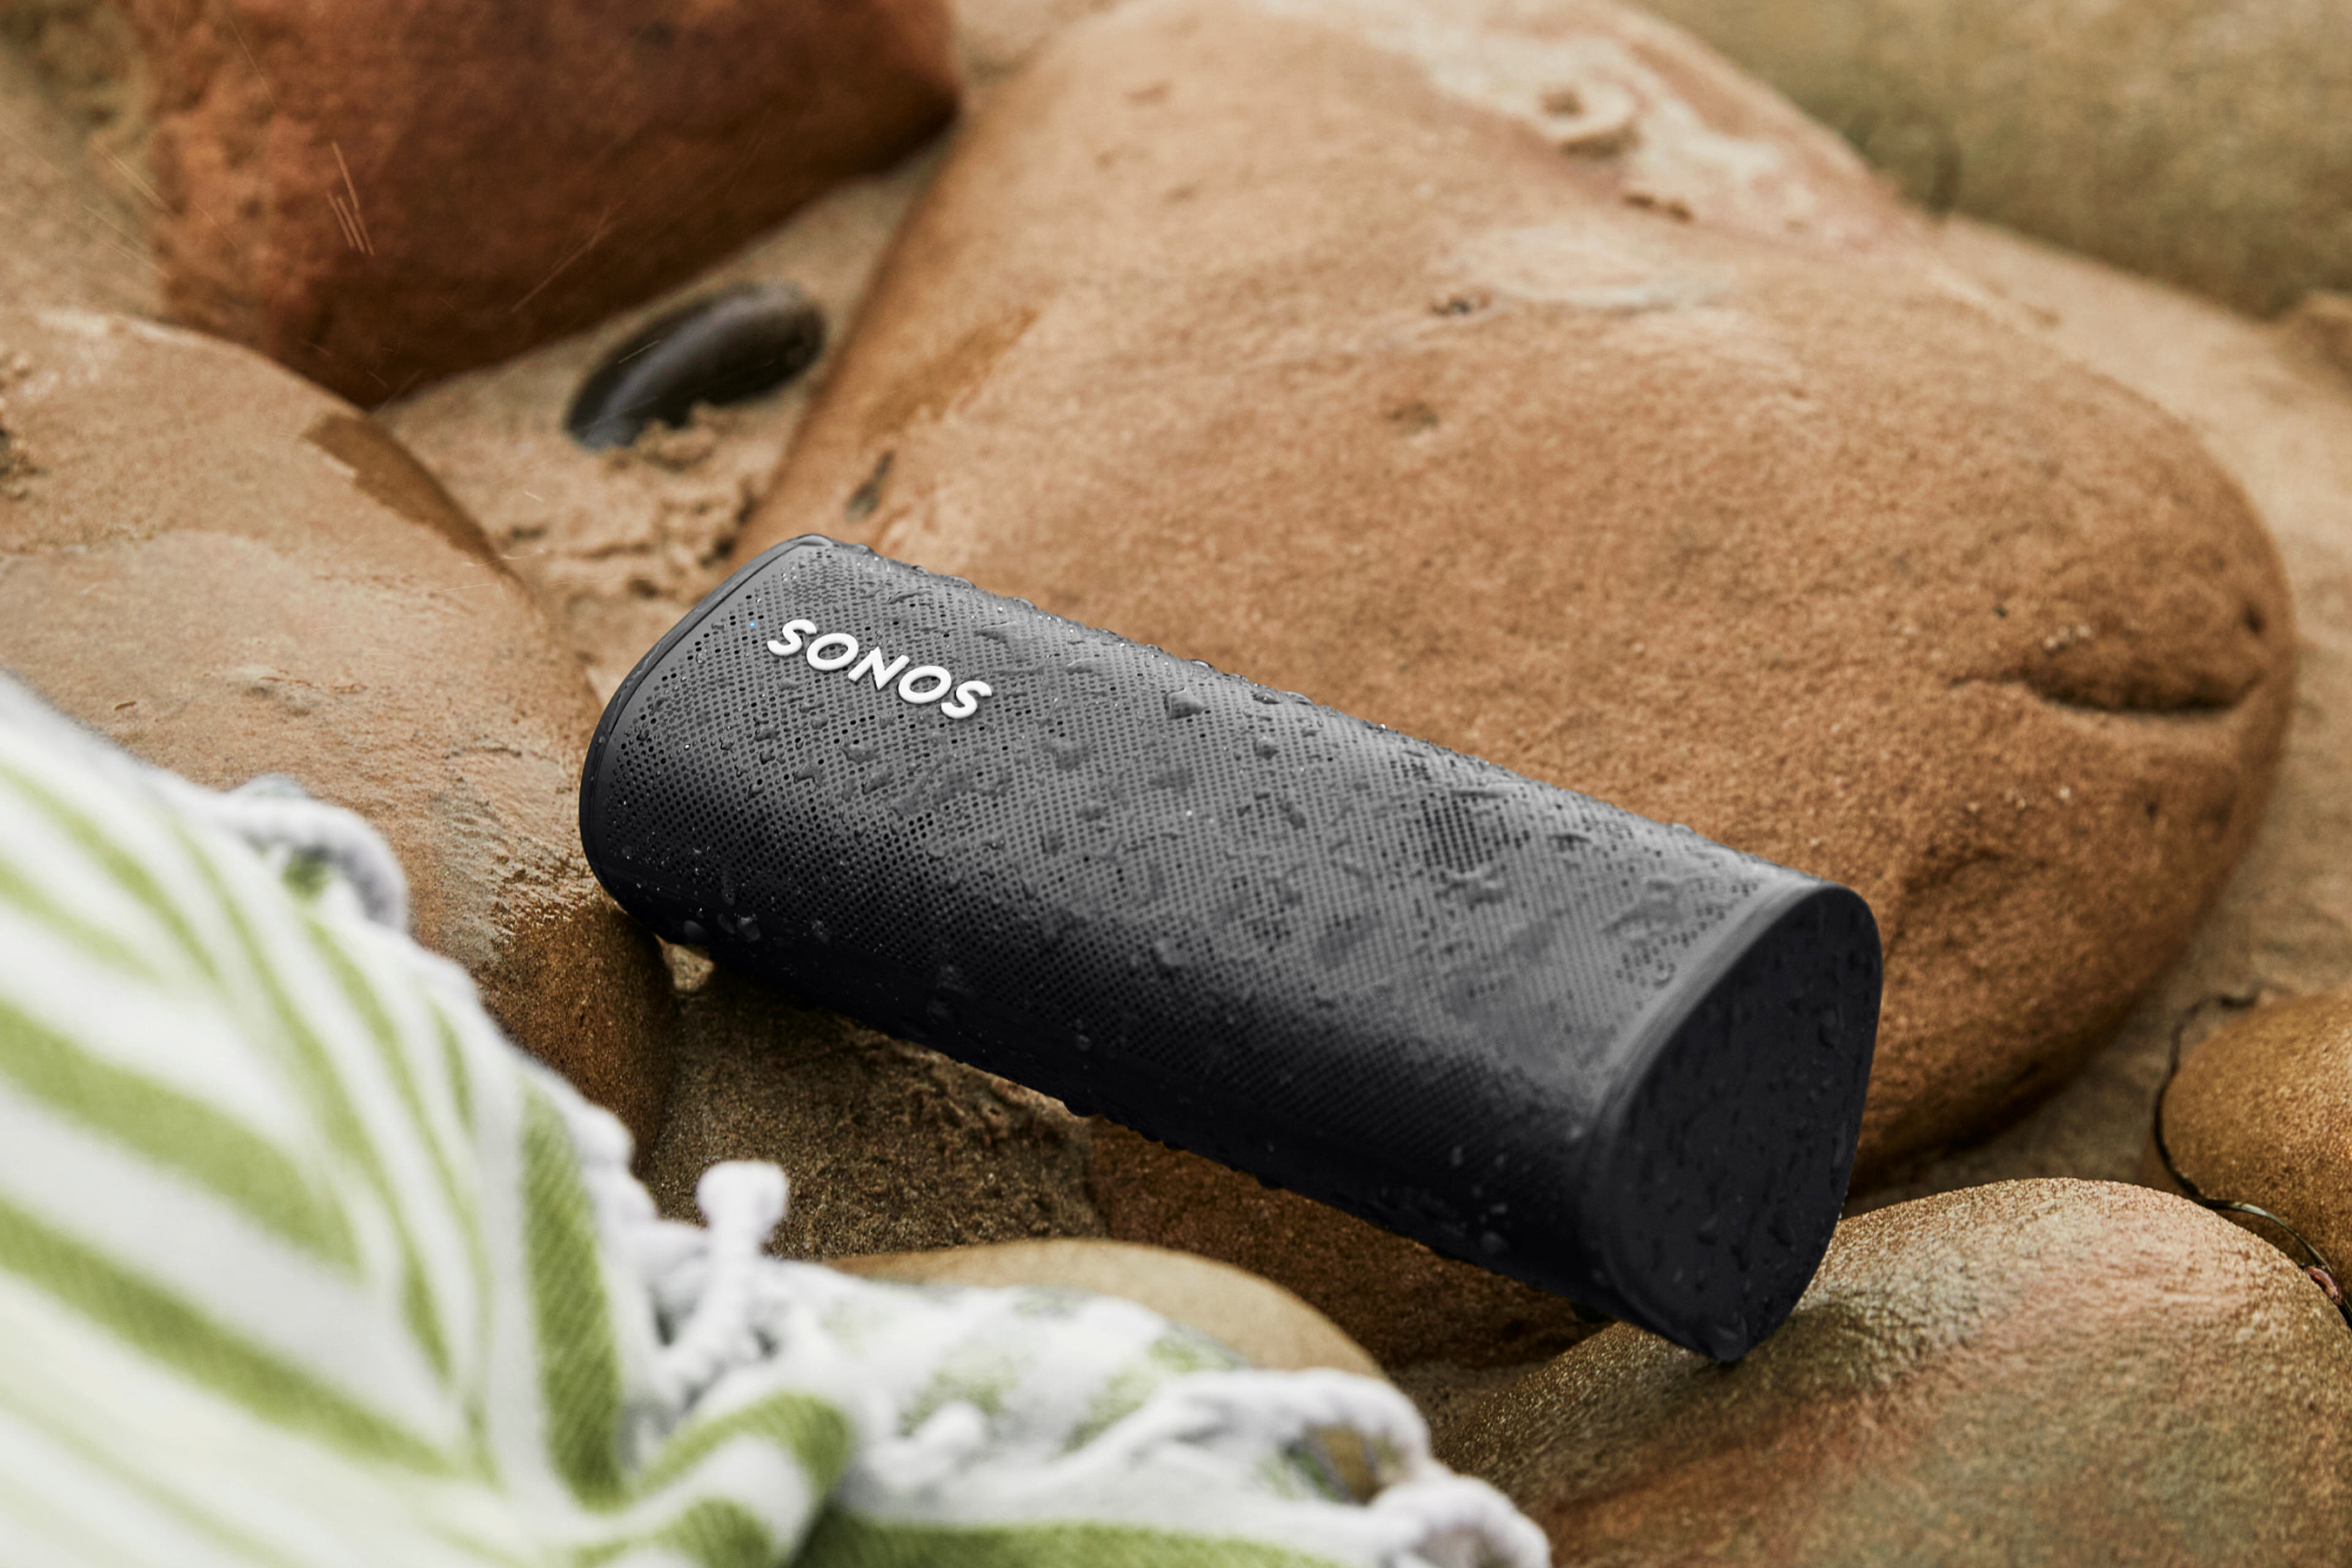 Roam speaker in Olive being used outdoors near waterfall